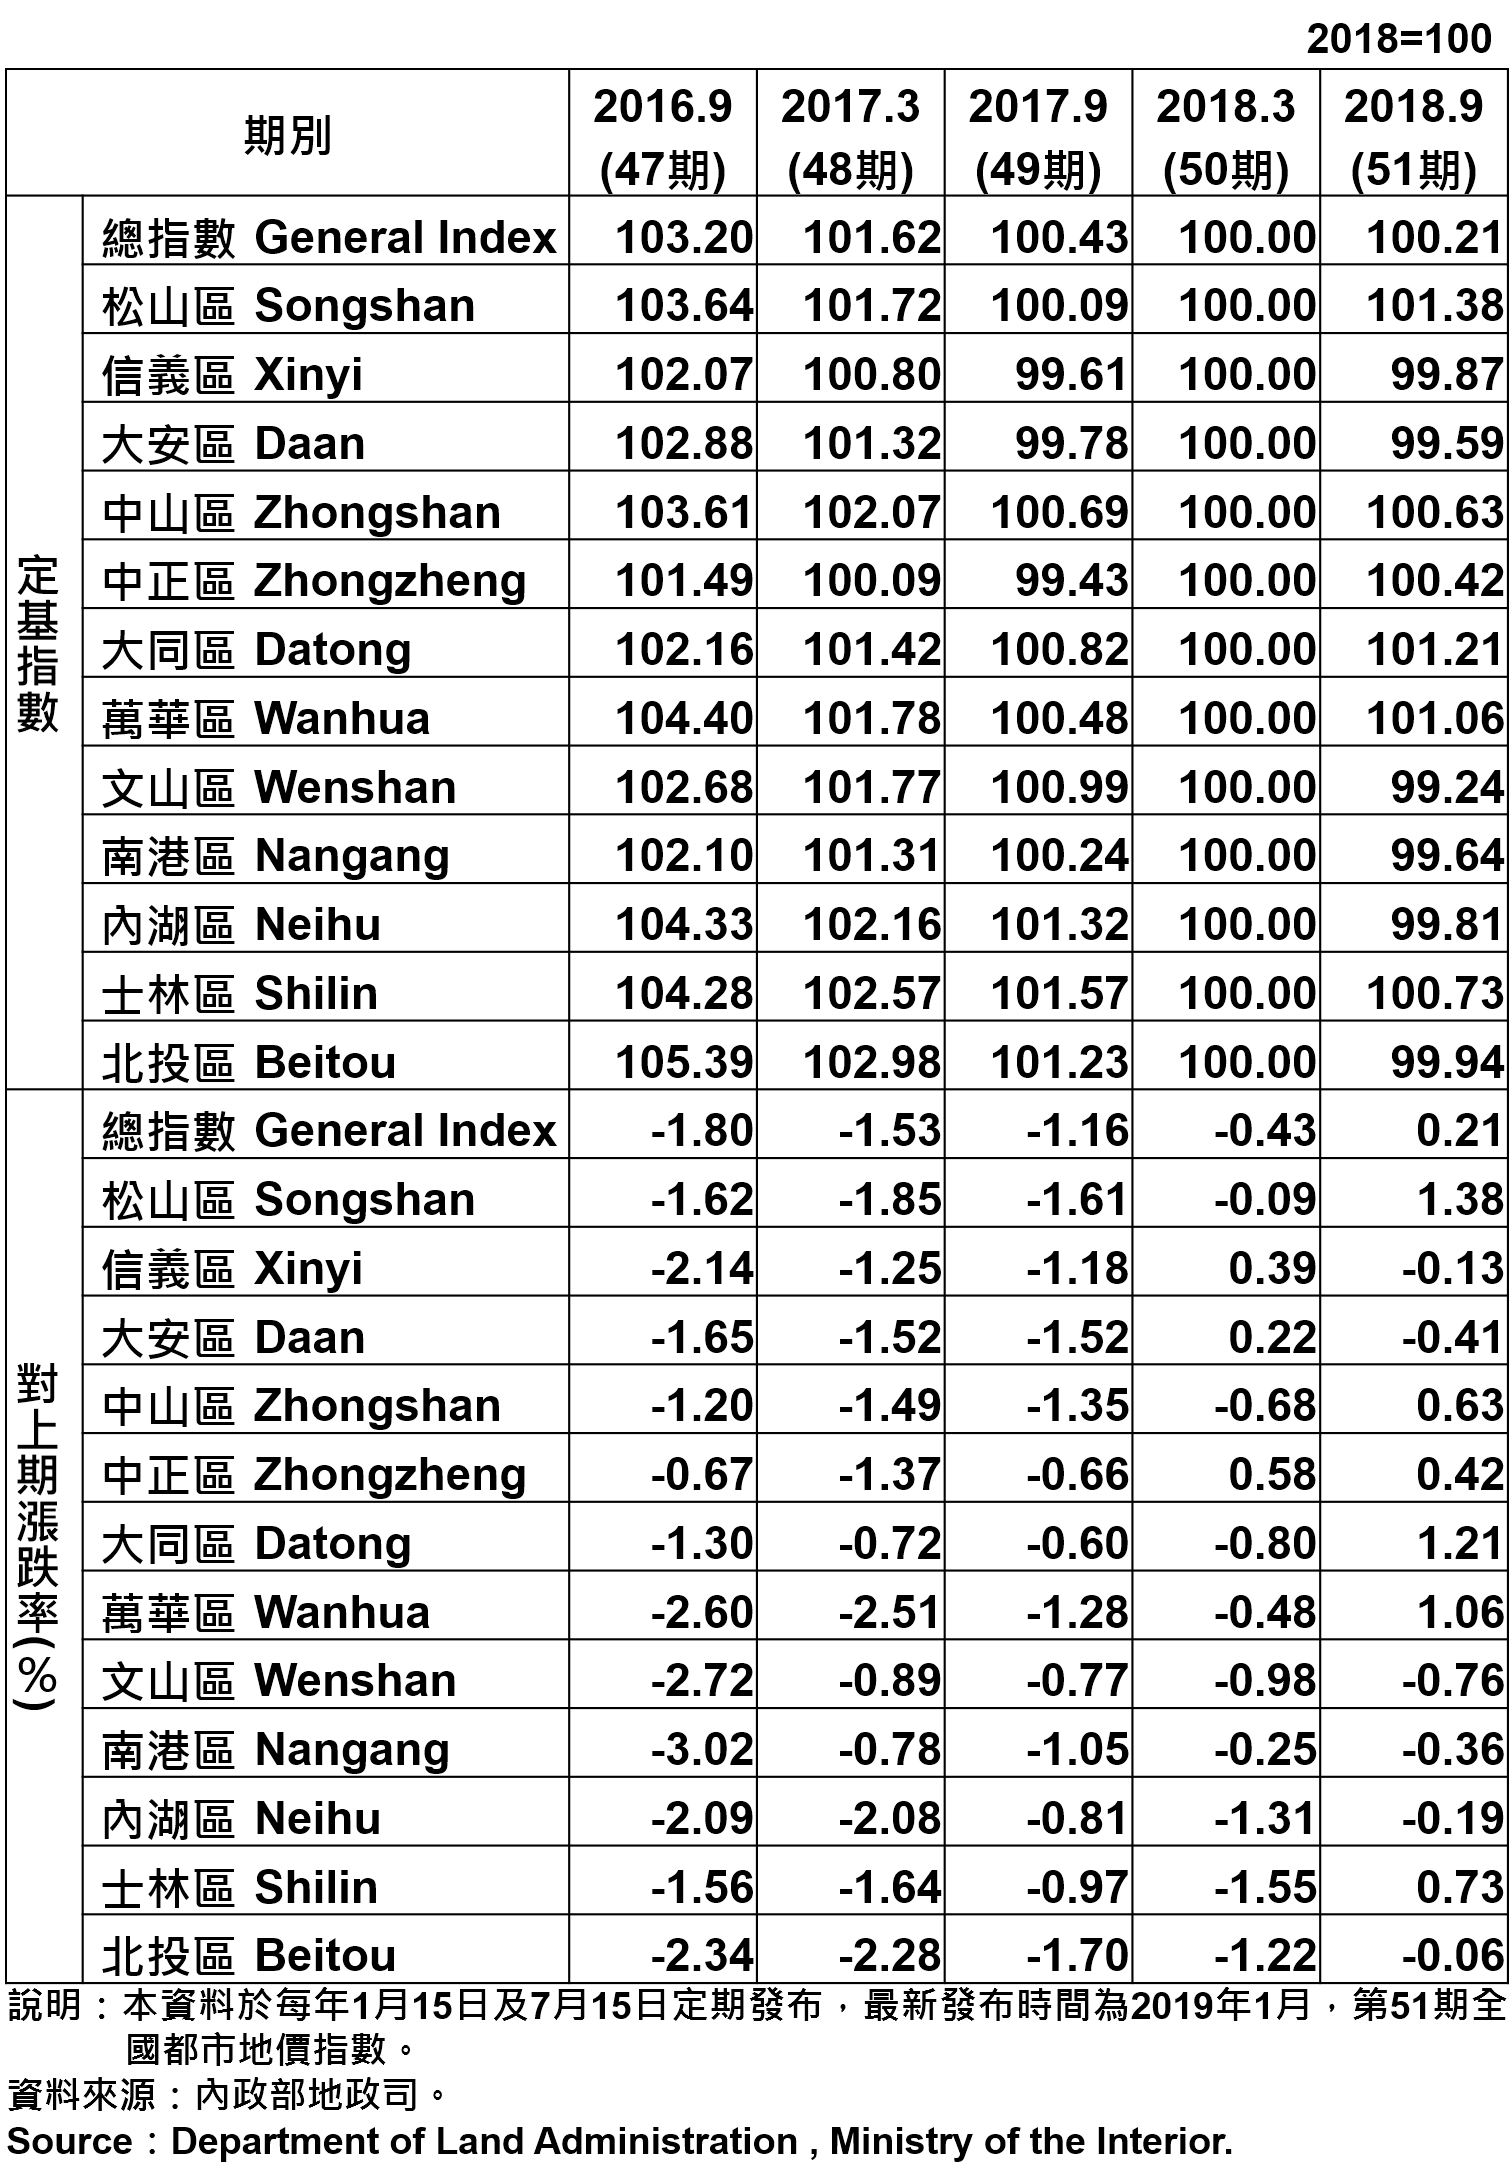 臺北市都市地價指數分區表—51期 Taipei's Urban Land Price Indexes by Districts—51th